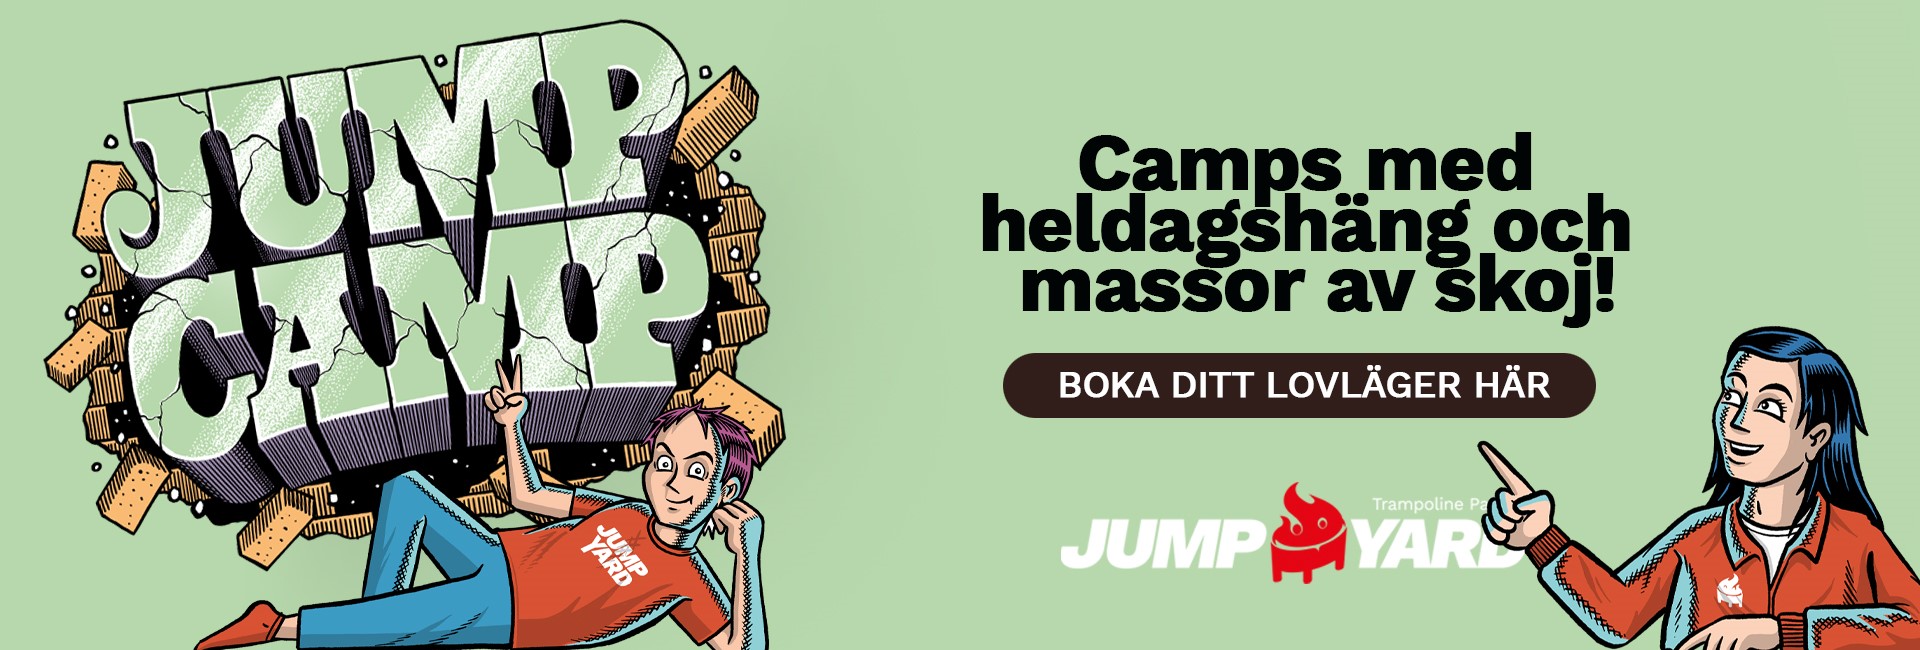 JumpCamp Norrköping nyhetsbrev